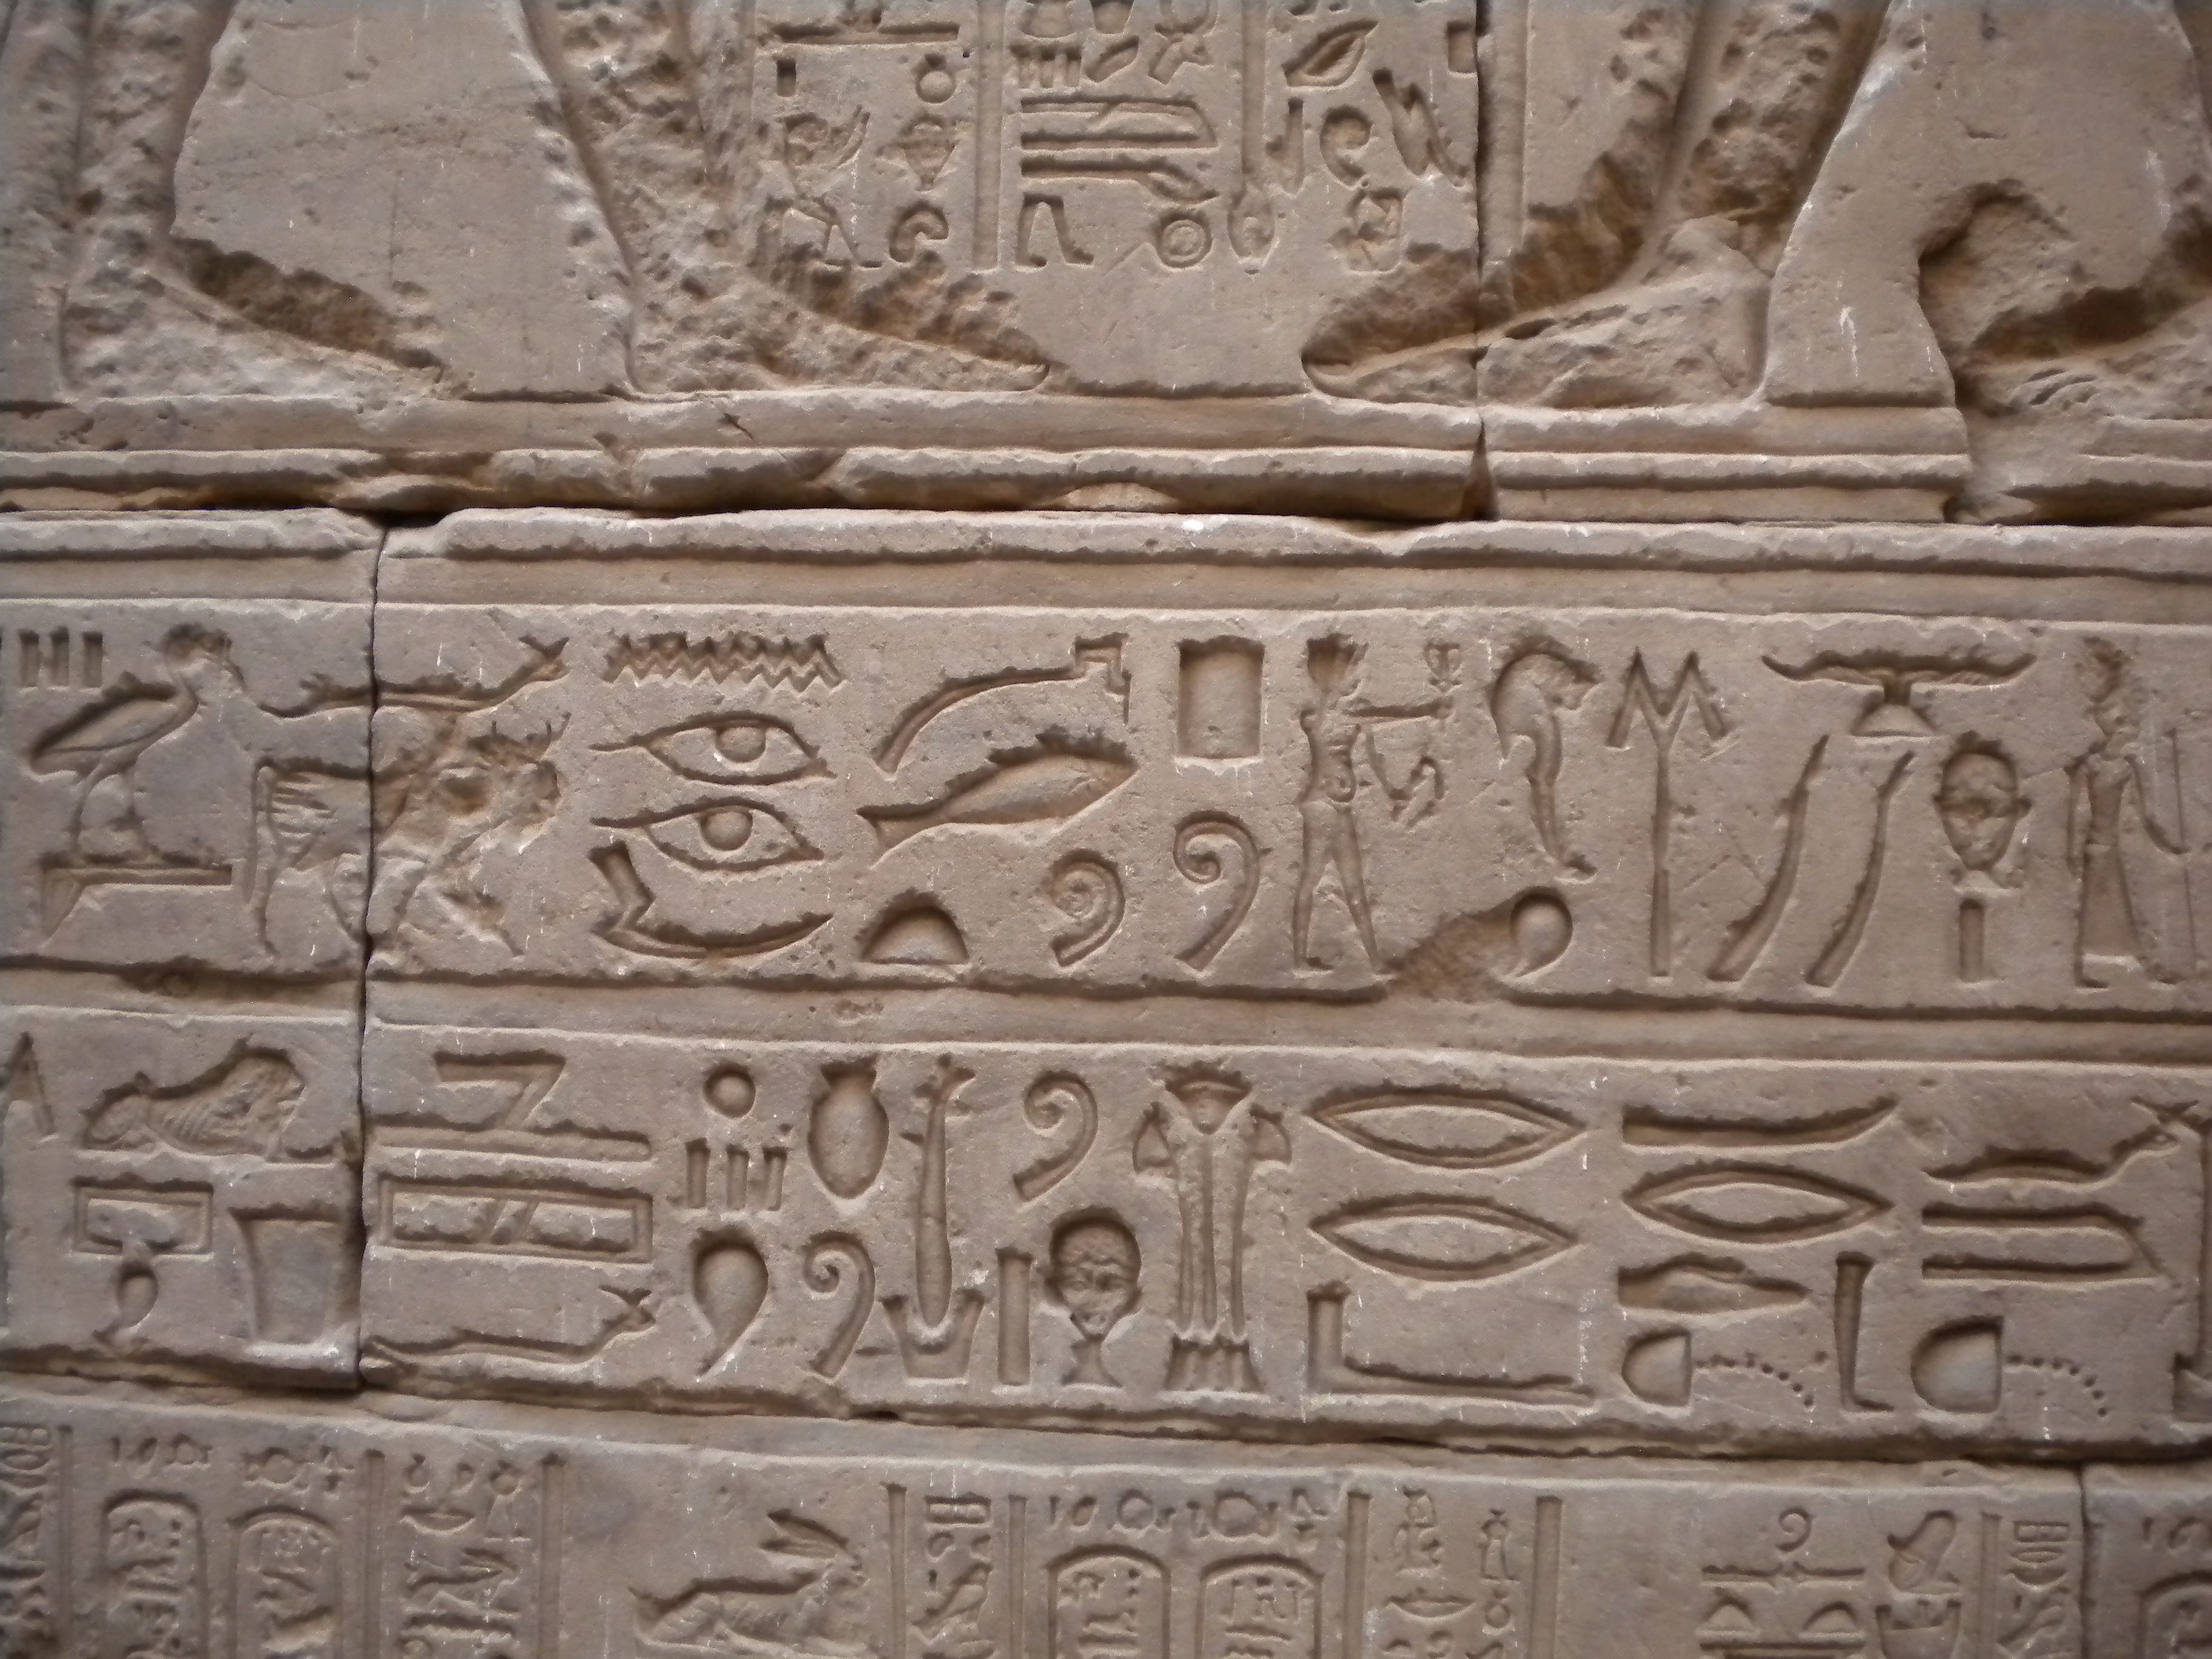 Man Made Hieroglyphics 3840x2880